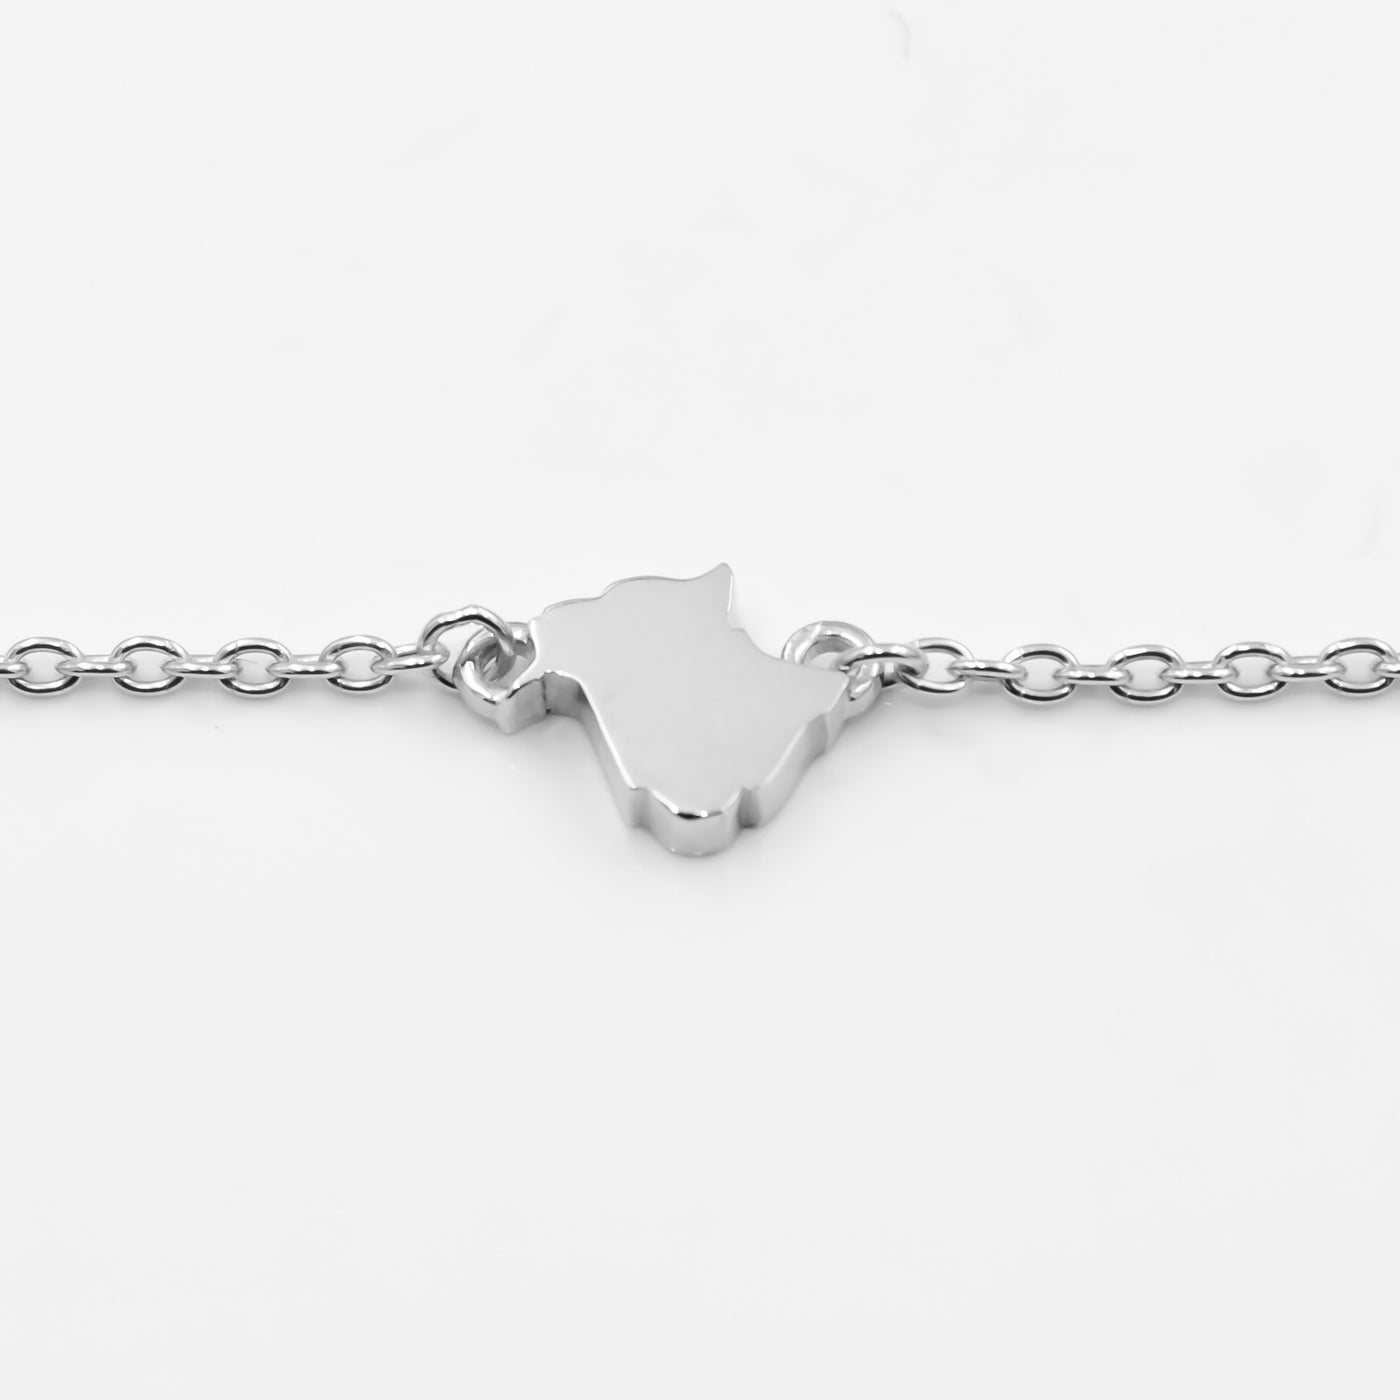 Handmade Province and Territory of Canada Bracelets